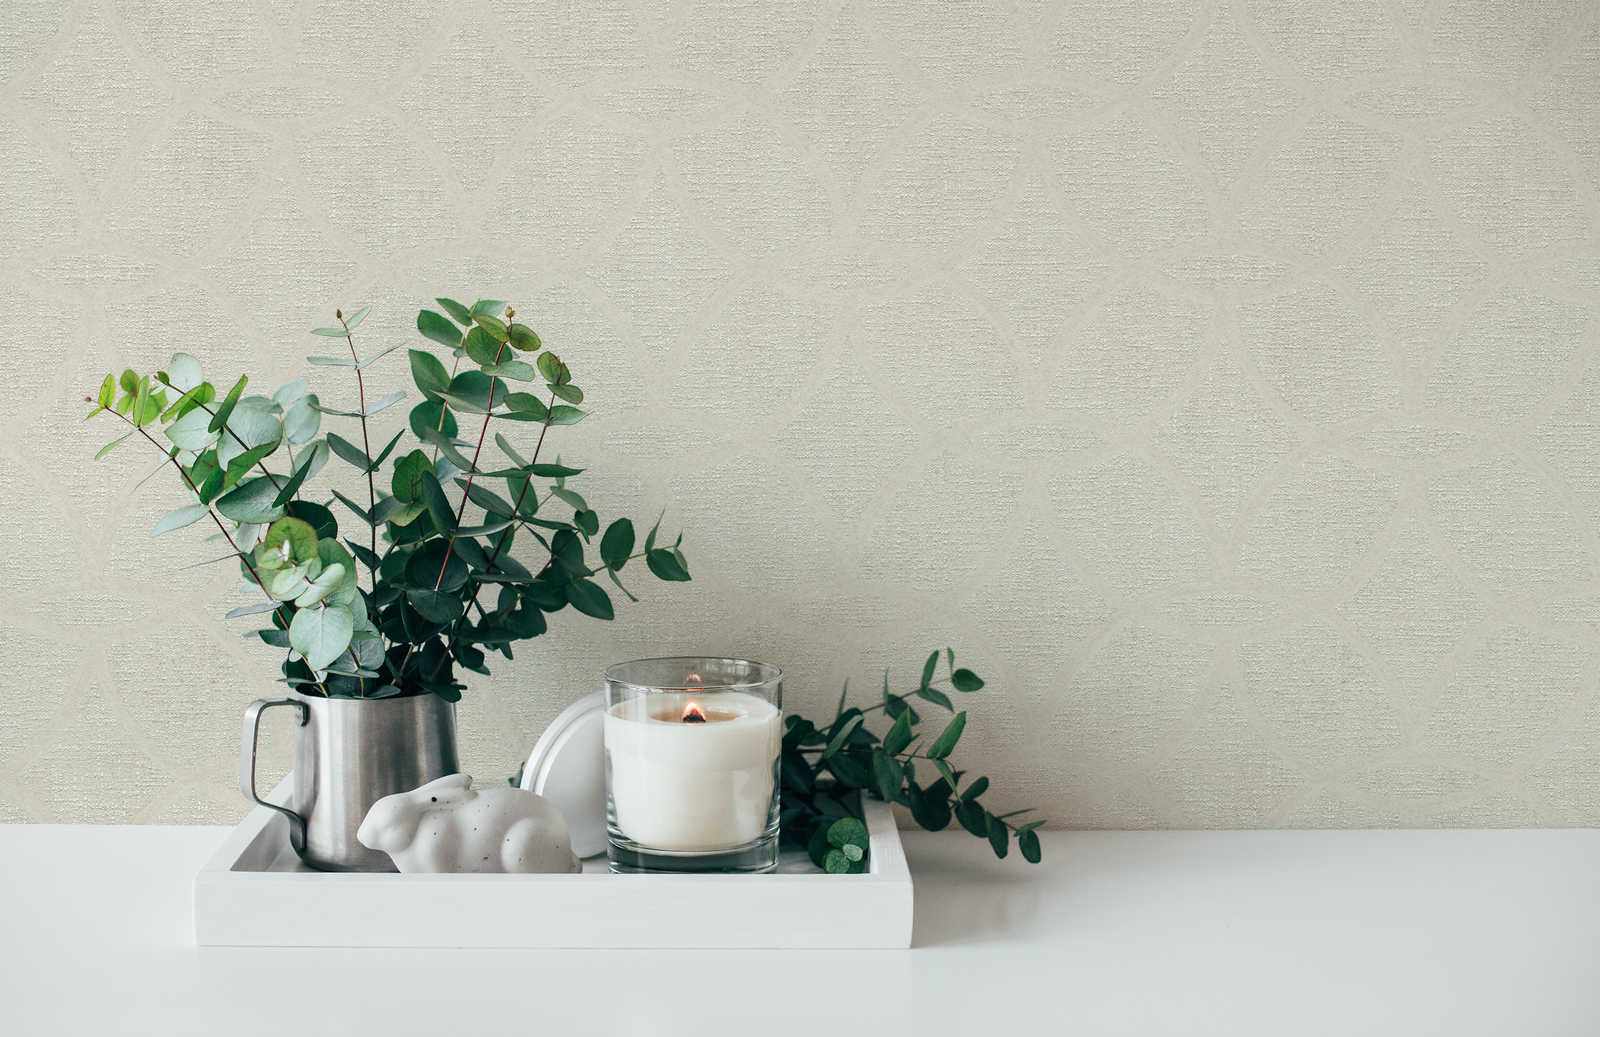             Cream white wallpaper with bright glossy pattern & geometric design - white
        